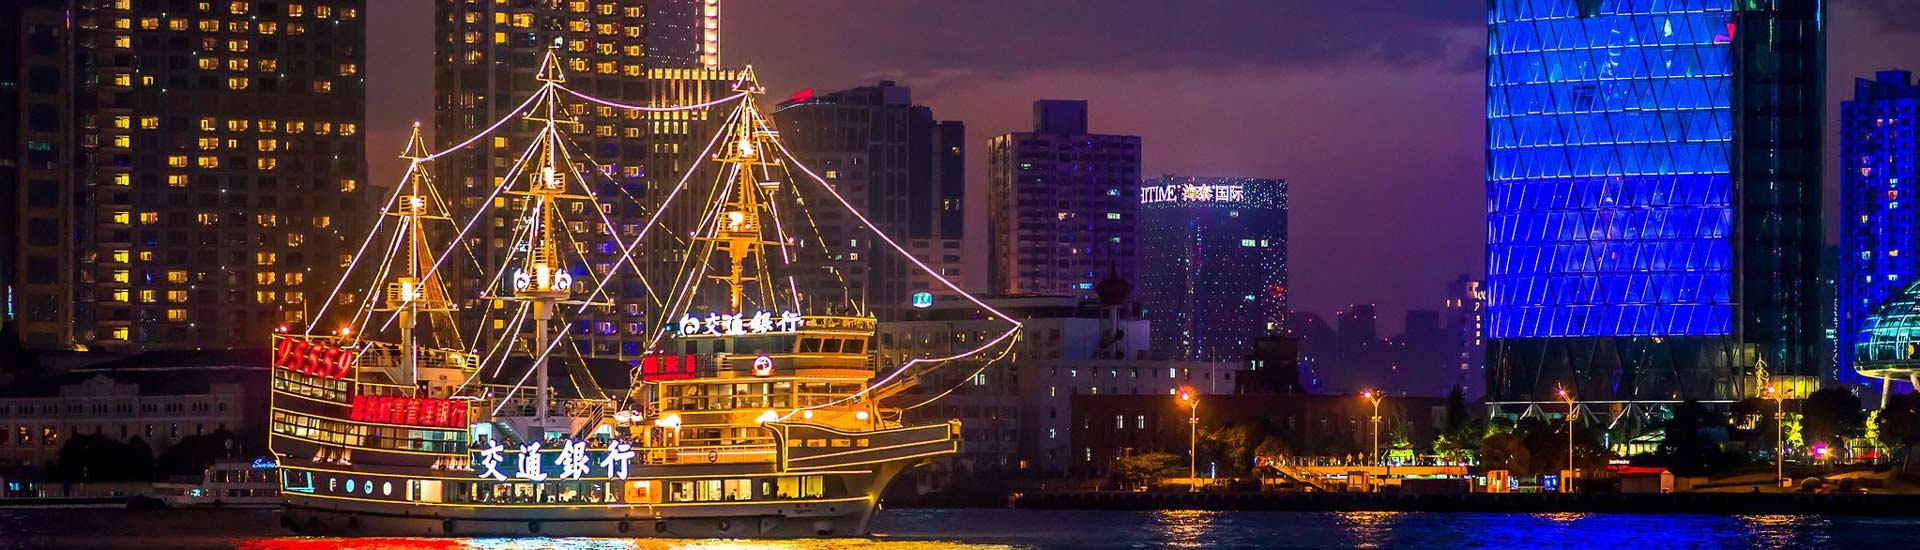 Huangpu River Cruise Ticket